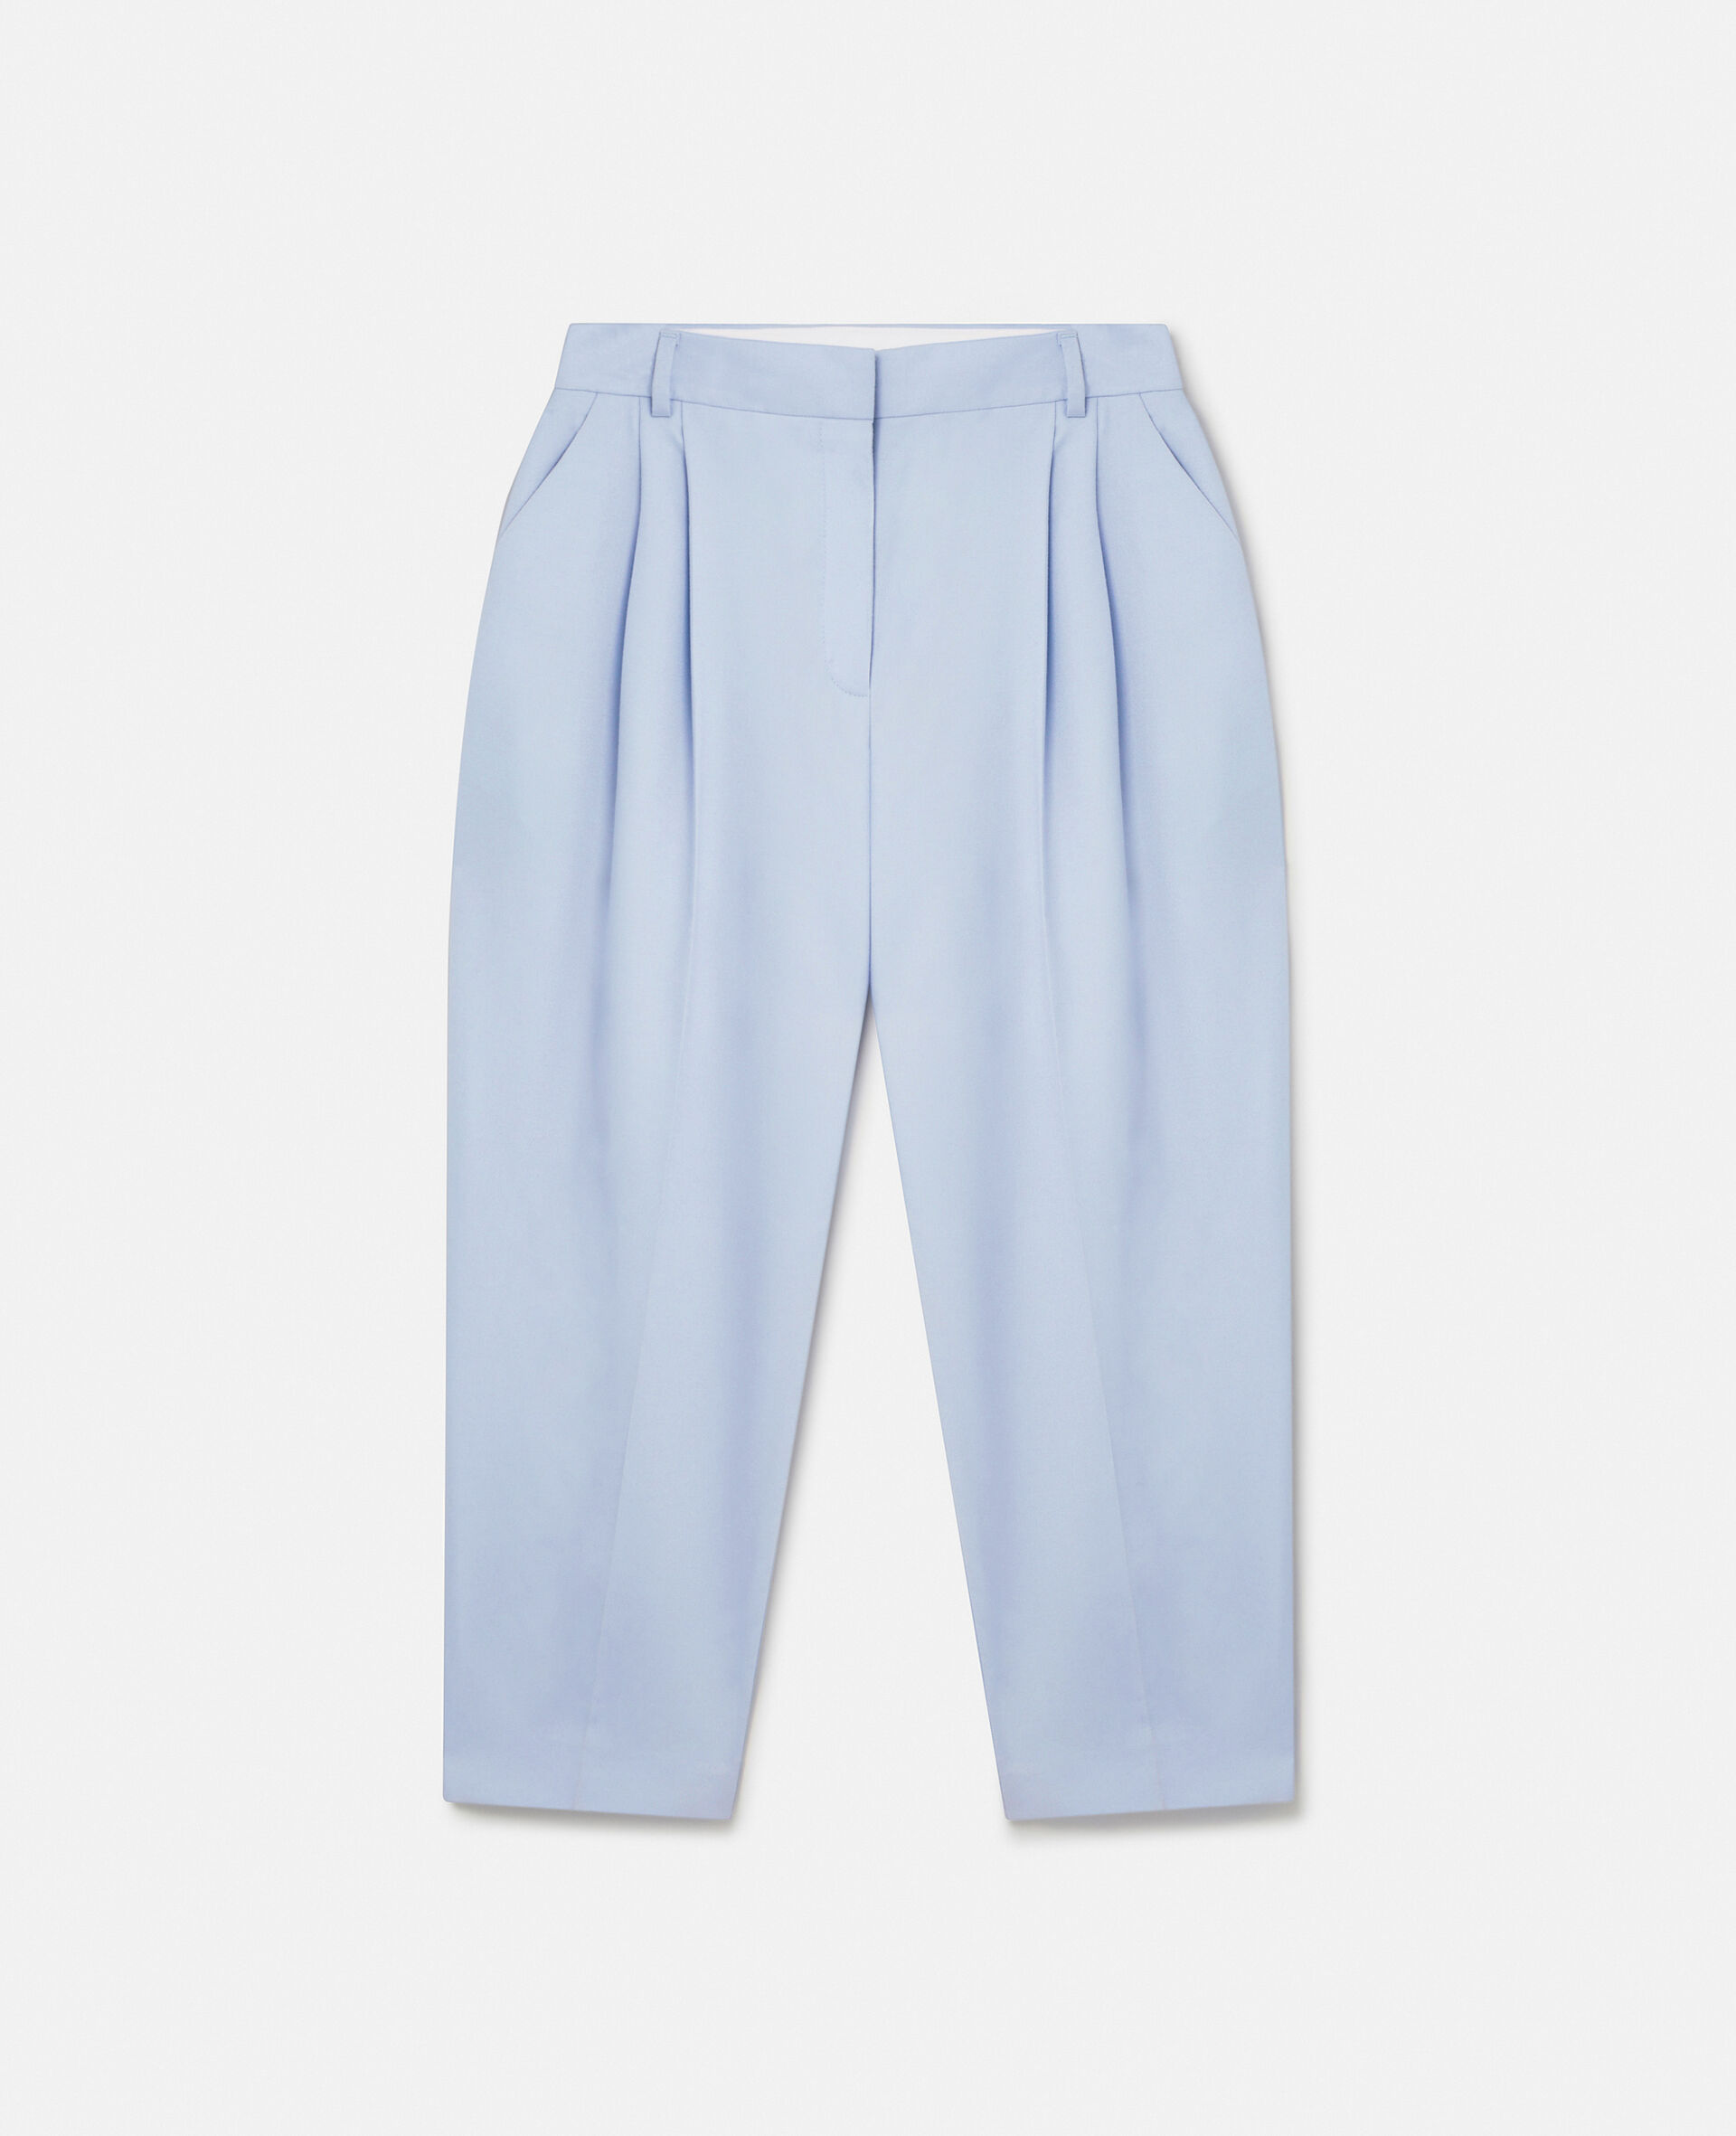 Pantalon plisse court-Bleu-large image number 0